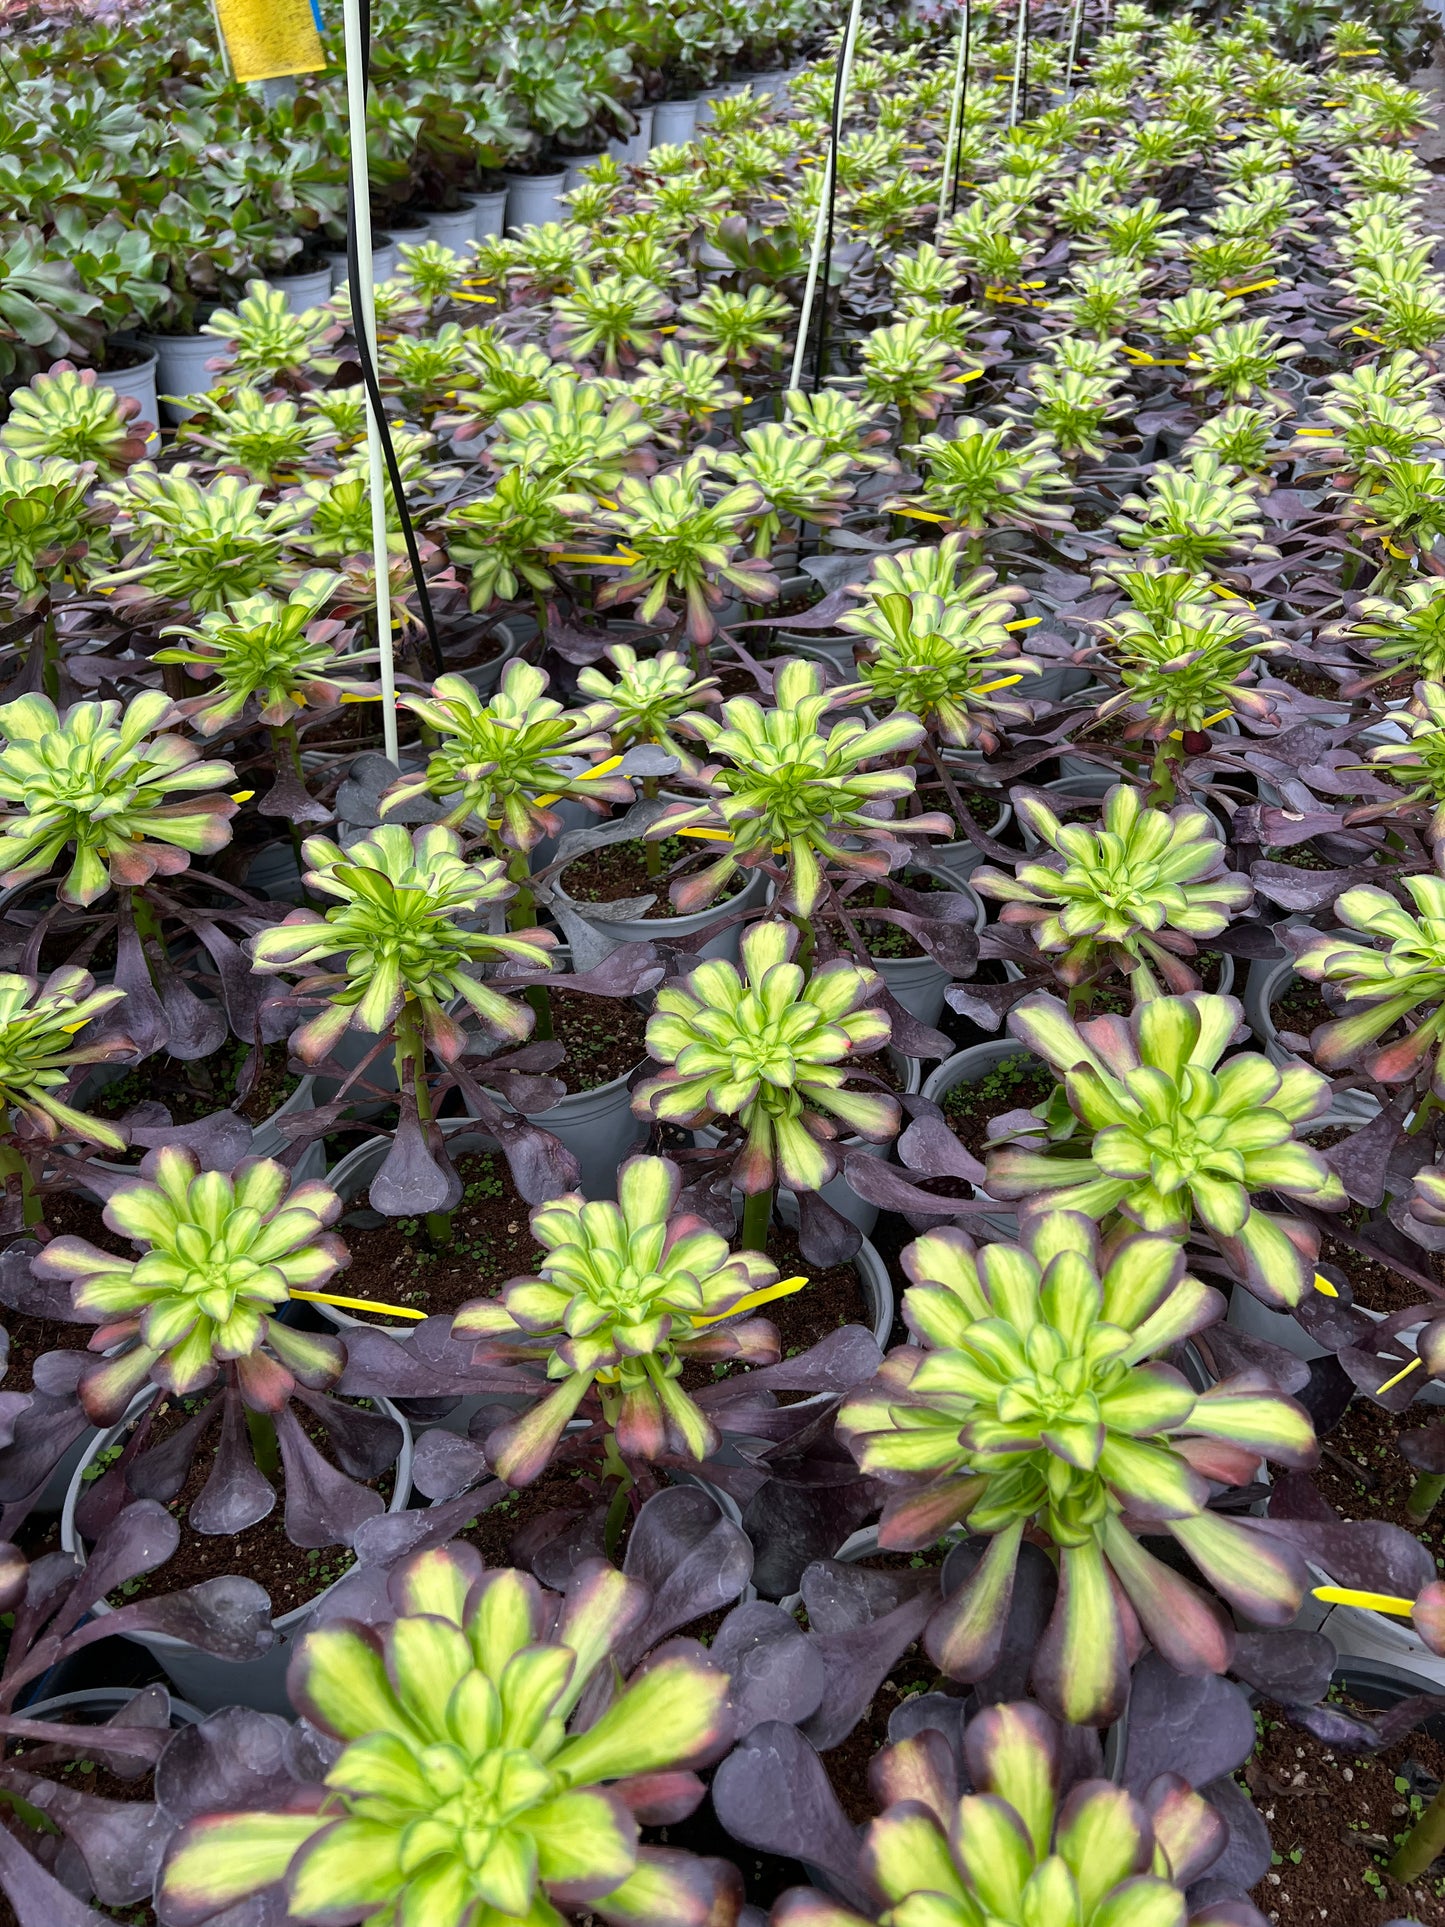 Shaohua single head 15-20cm / Aeonium single head/Variegated Natural Live Plants Succulents